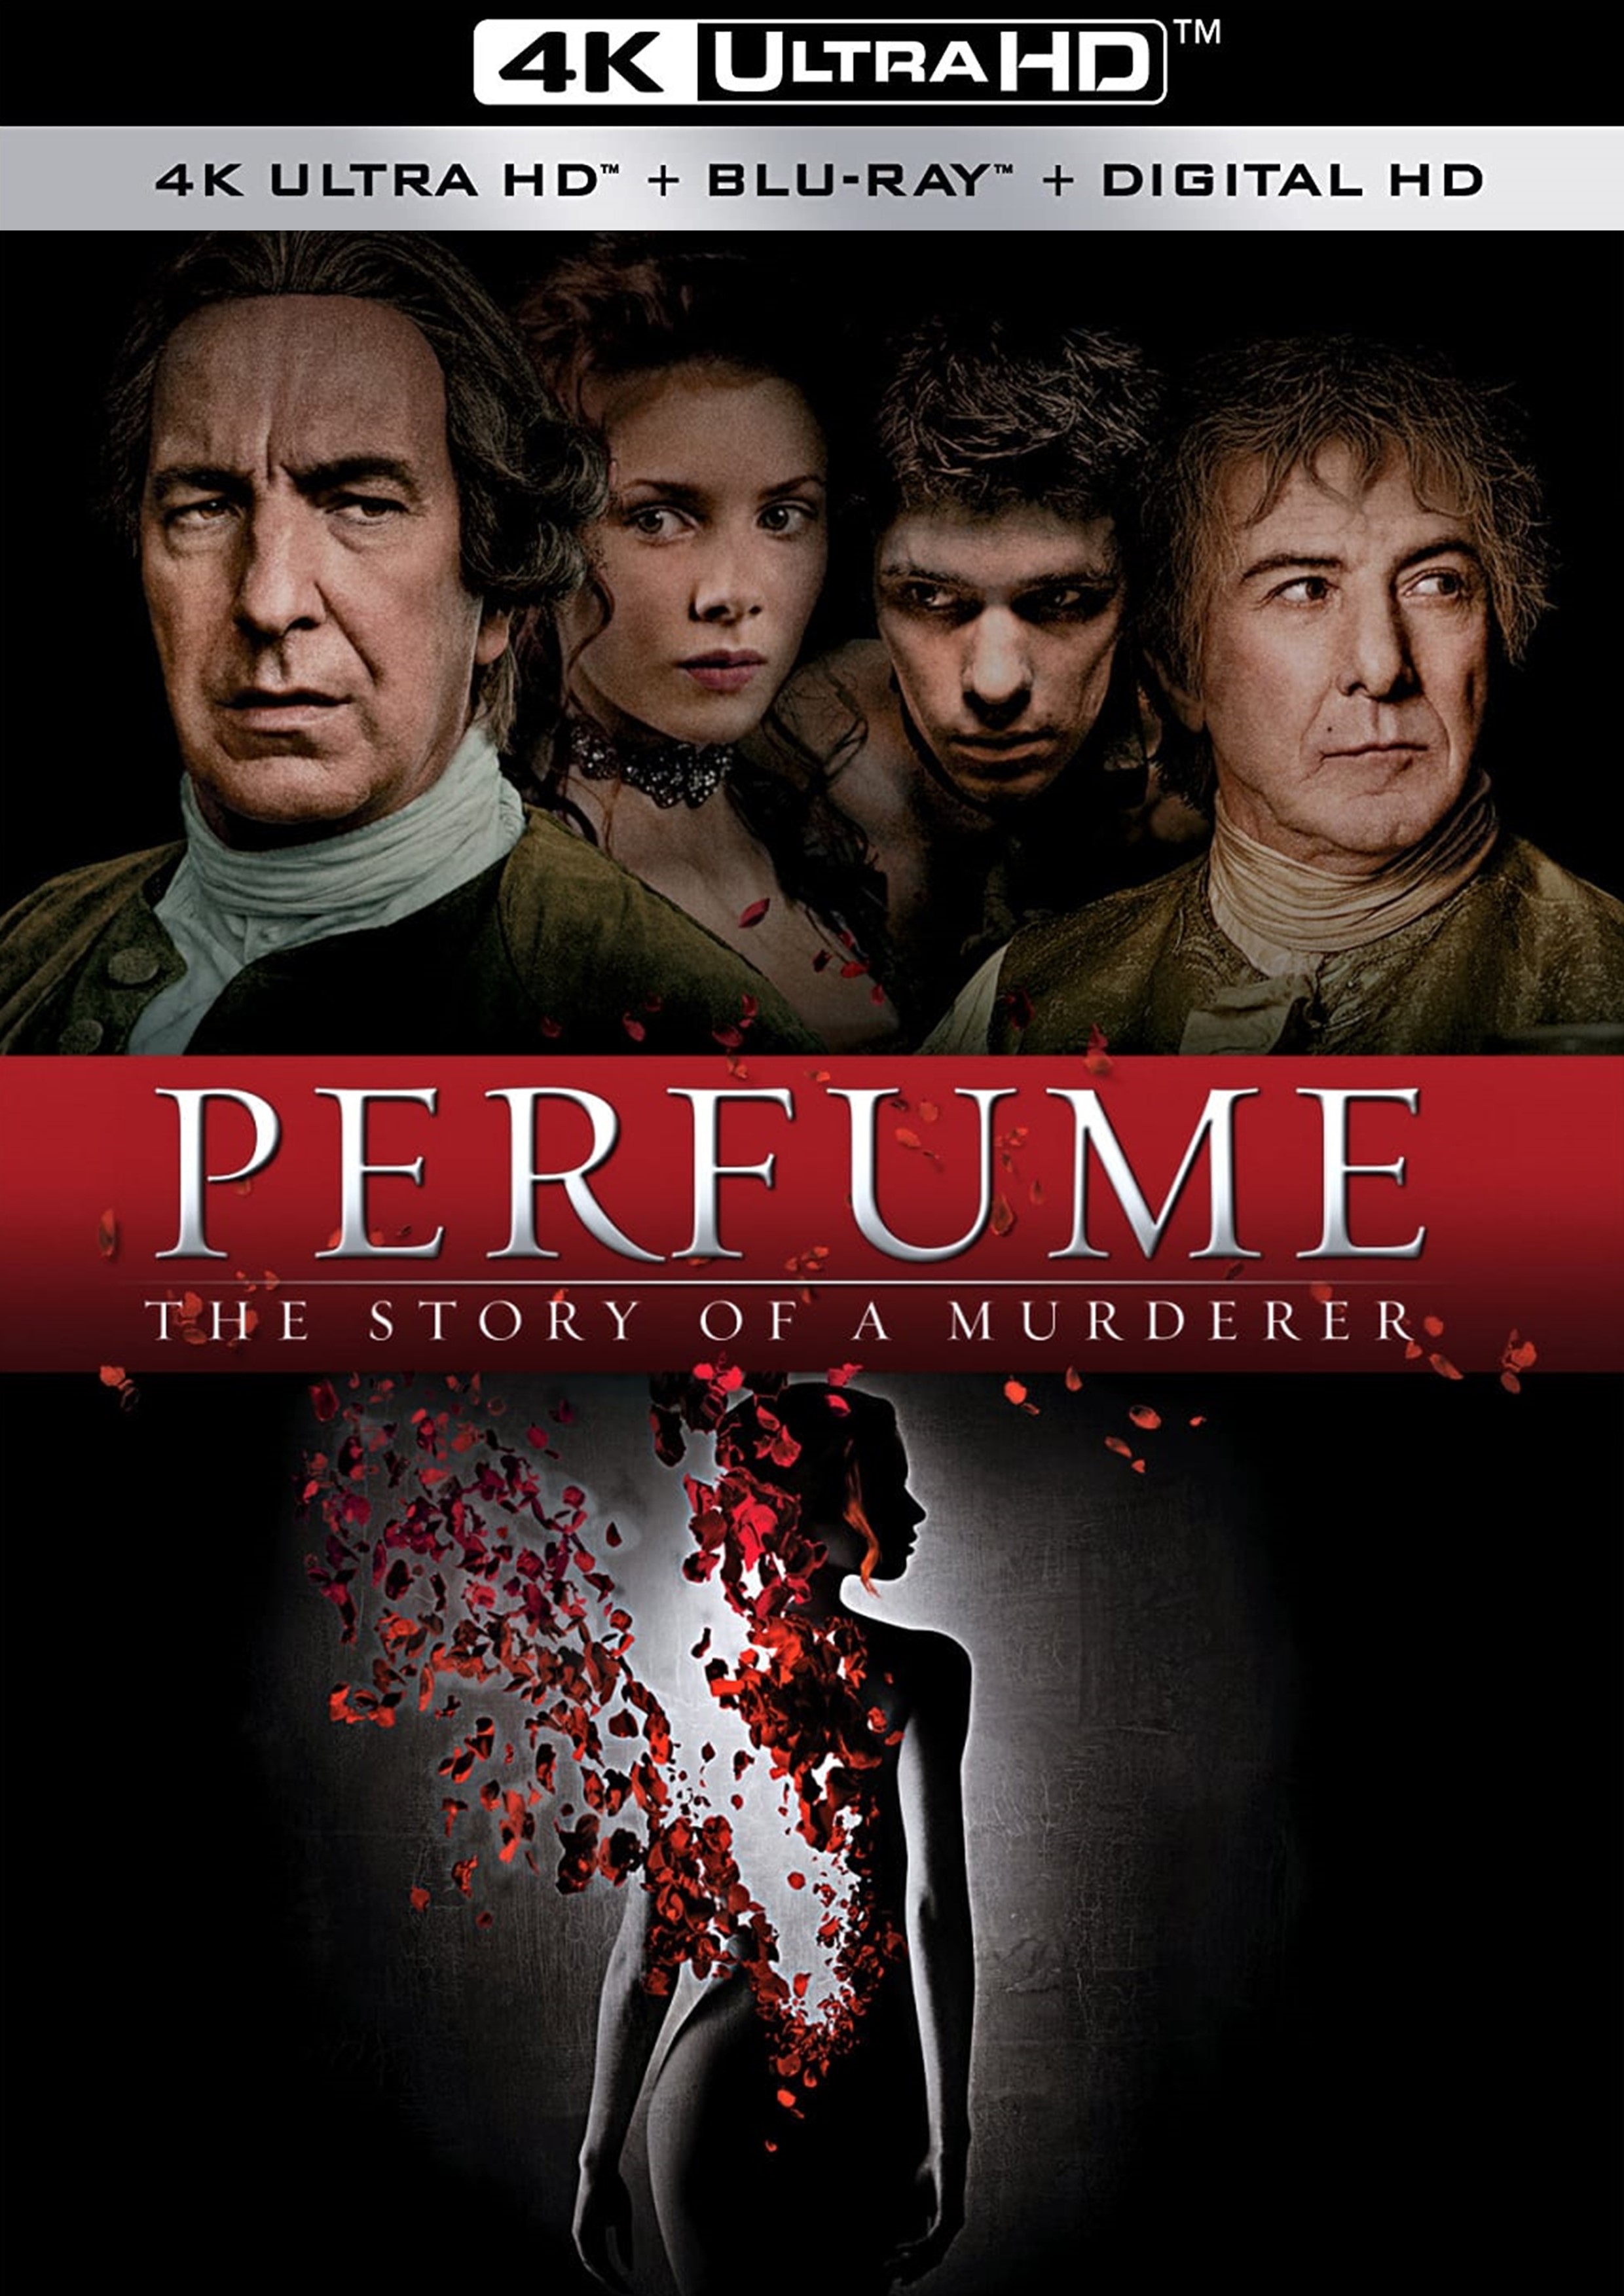 Stiahni si UHD Filmy Parfem: Pribeh vraha / Perfume: The Story of a Murderer (2006)(CZ/EN)(2160p 4K BRRemux) = CSFD 78%